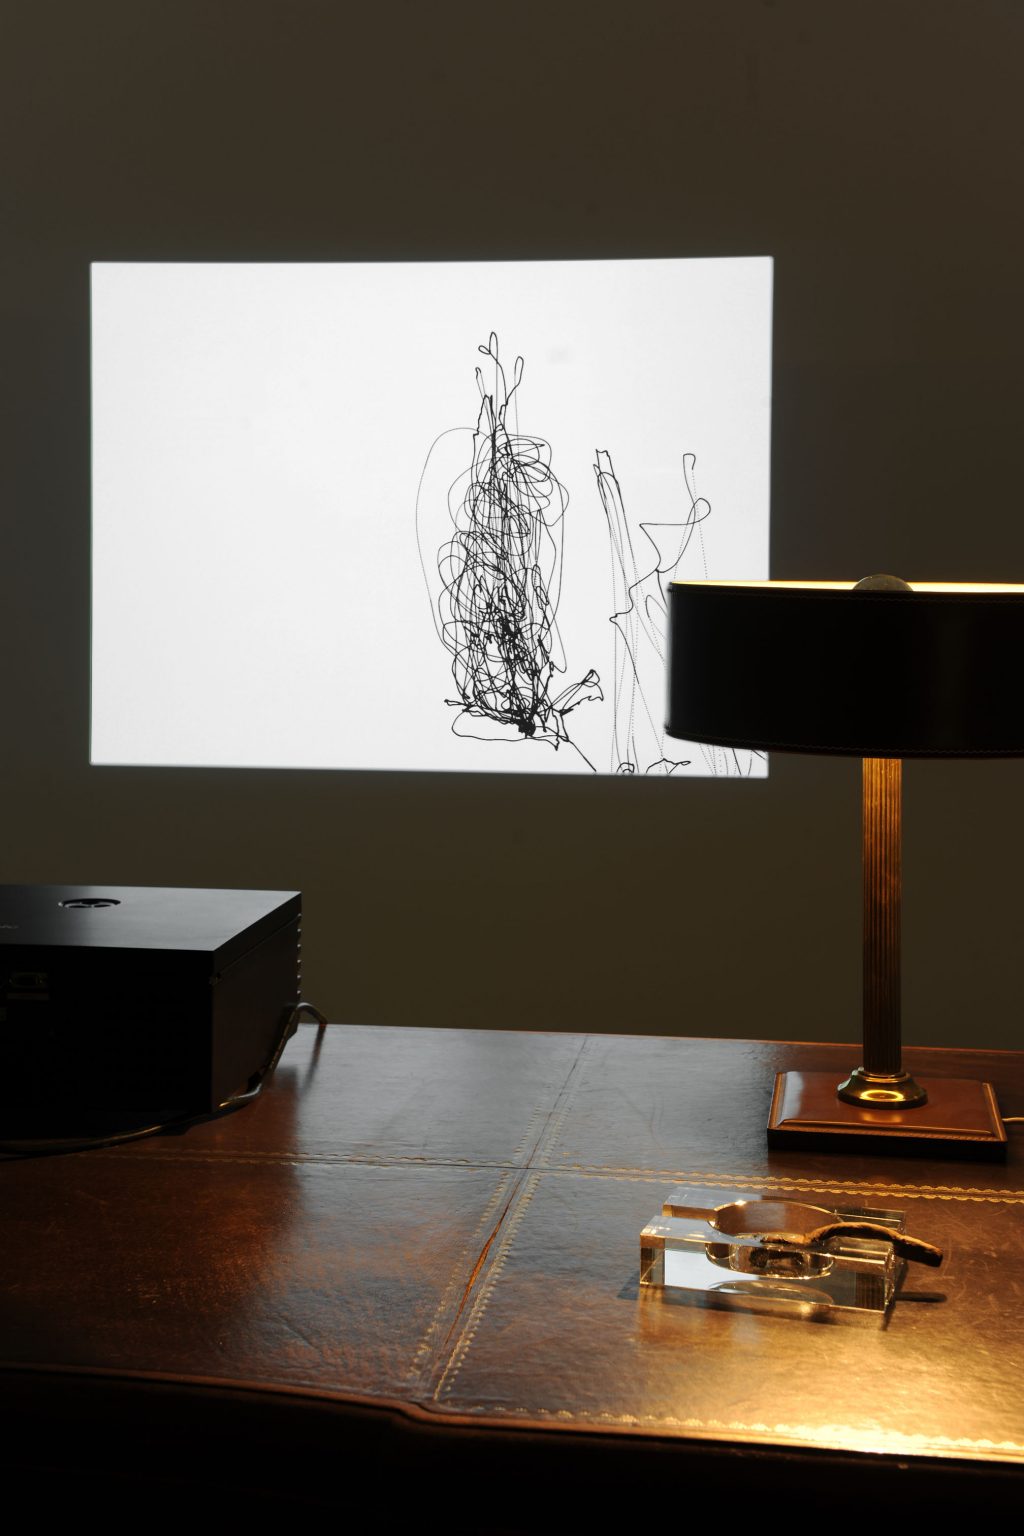 Pierre Bismuth, Le Versant de l'Analyse, installation view at Jan Mot, 2010